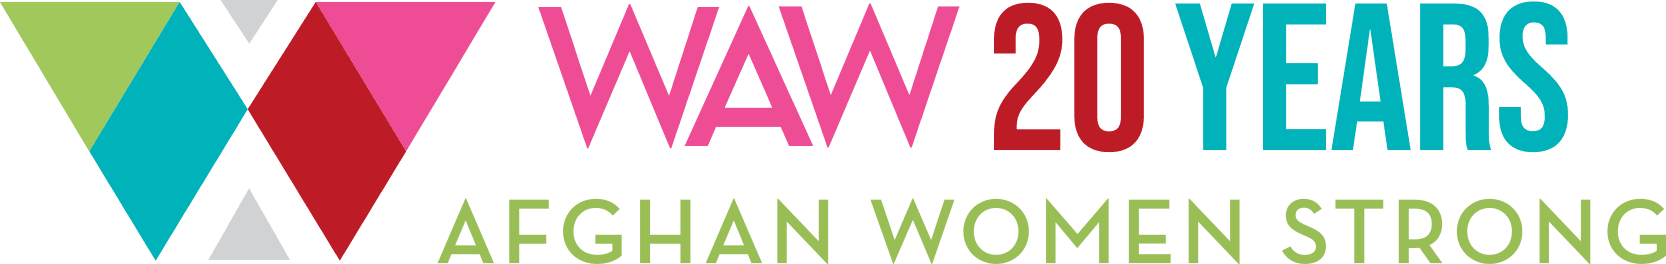 WAW-CharityAuction banner